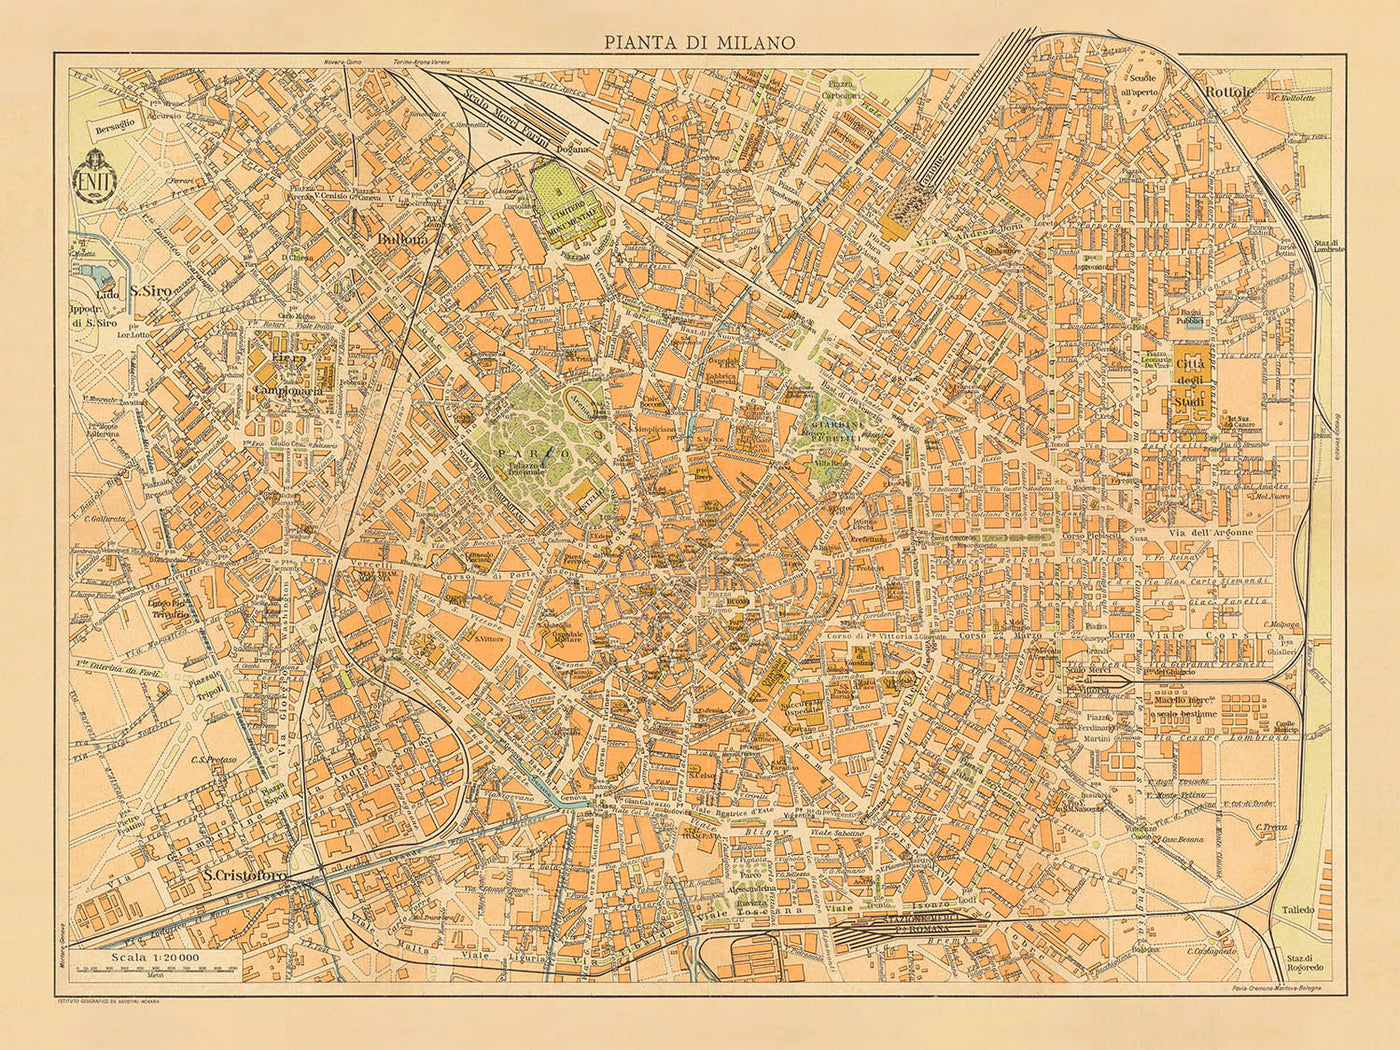 Old Map of Milan, 1935: Via Pallavicino Rail Track, San Marco Canal and Lake, Piazza Duomo